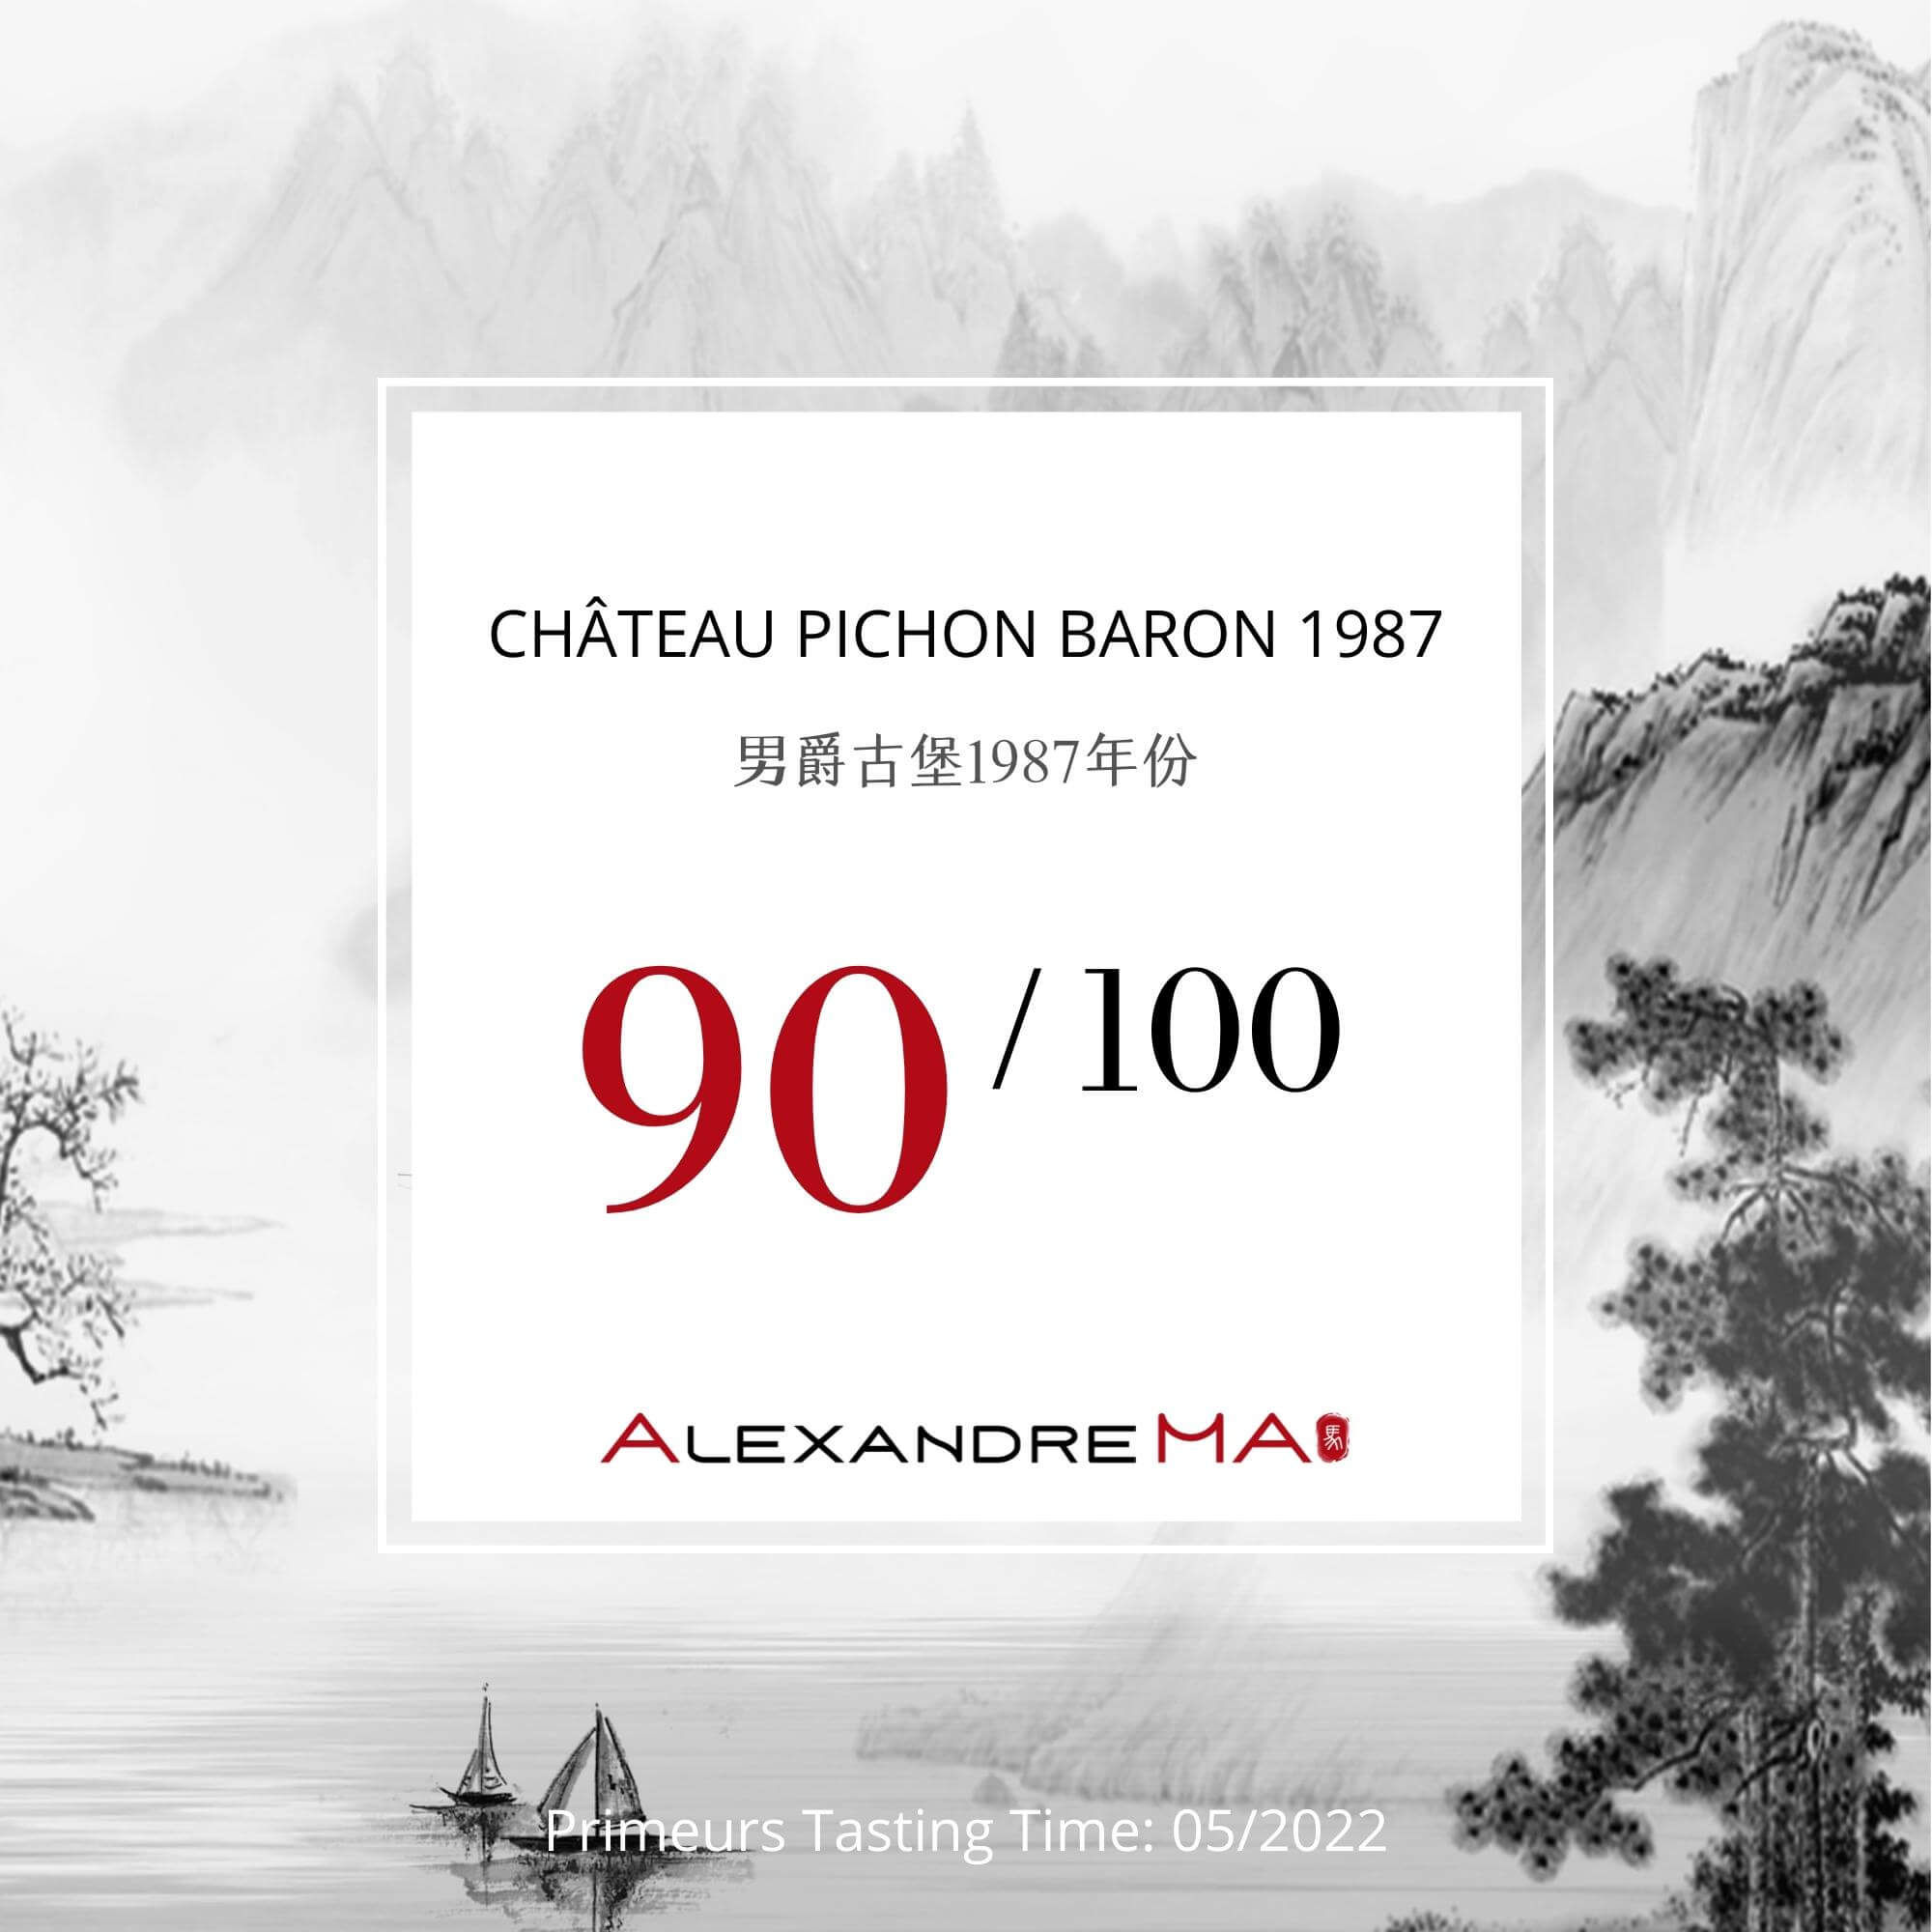 Château Pichon Baron 1987 - Alexandre MA